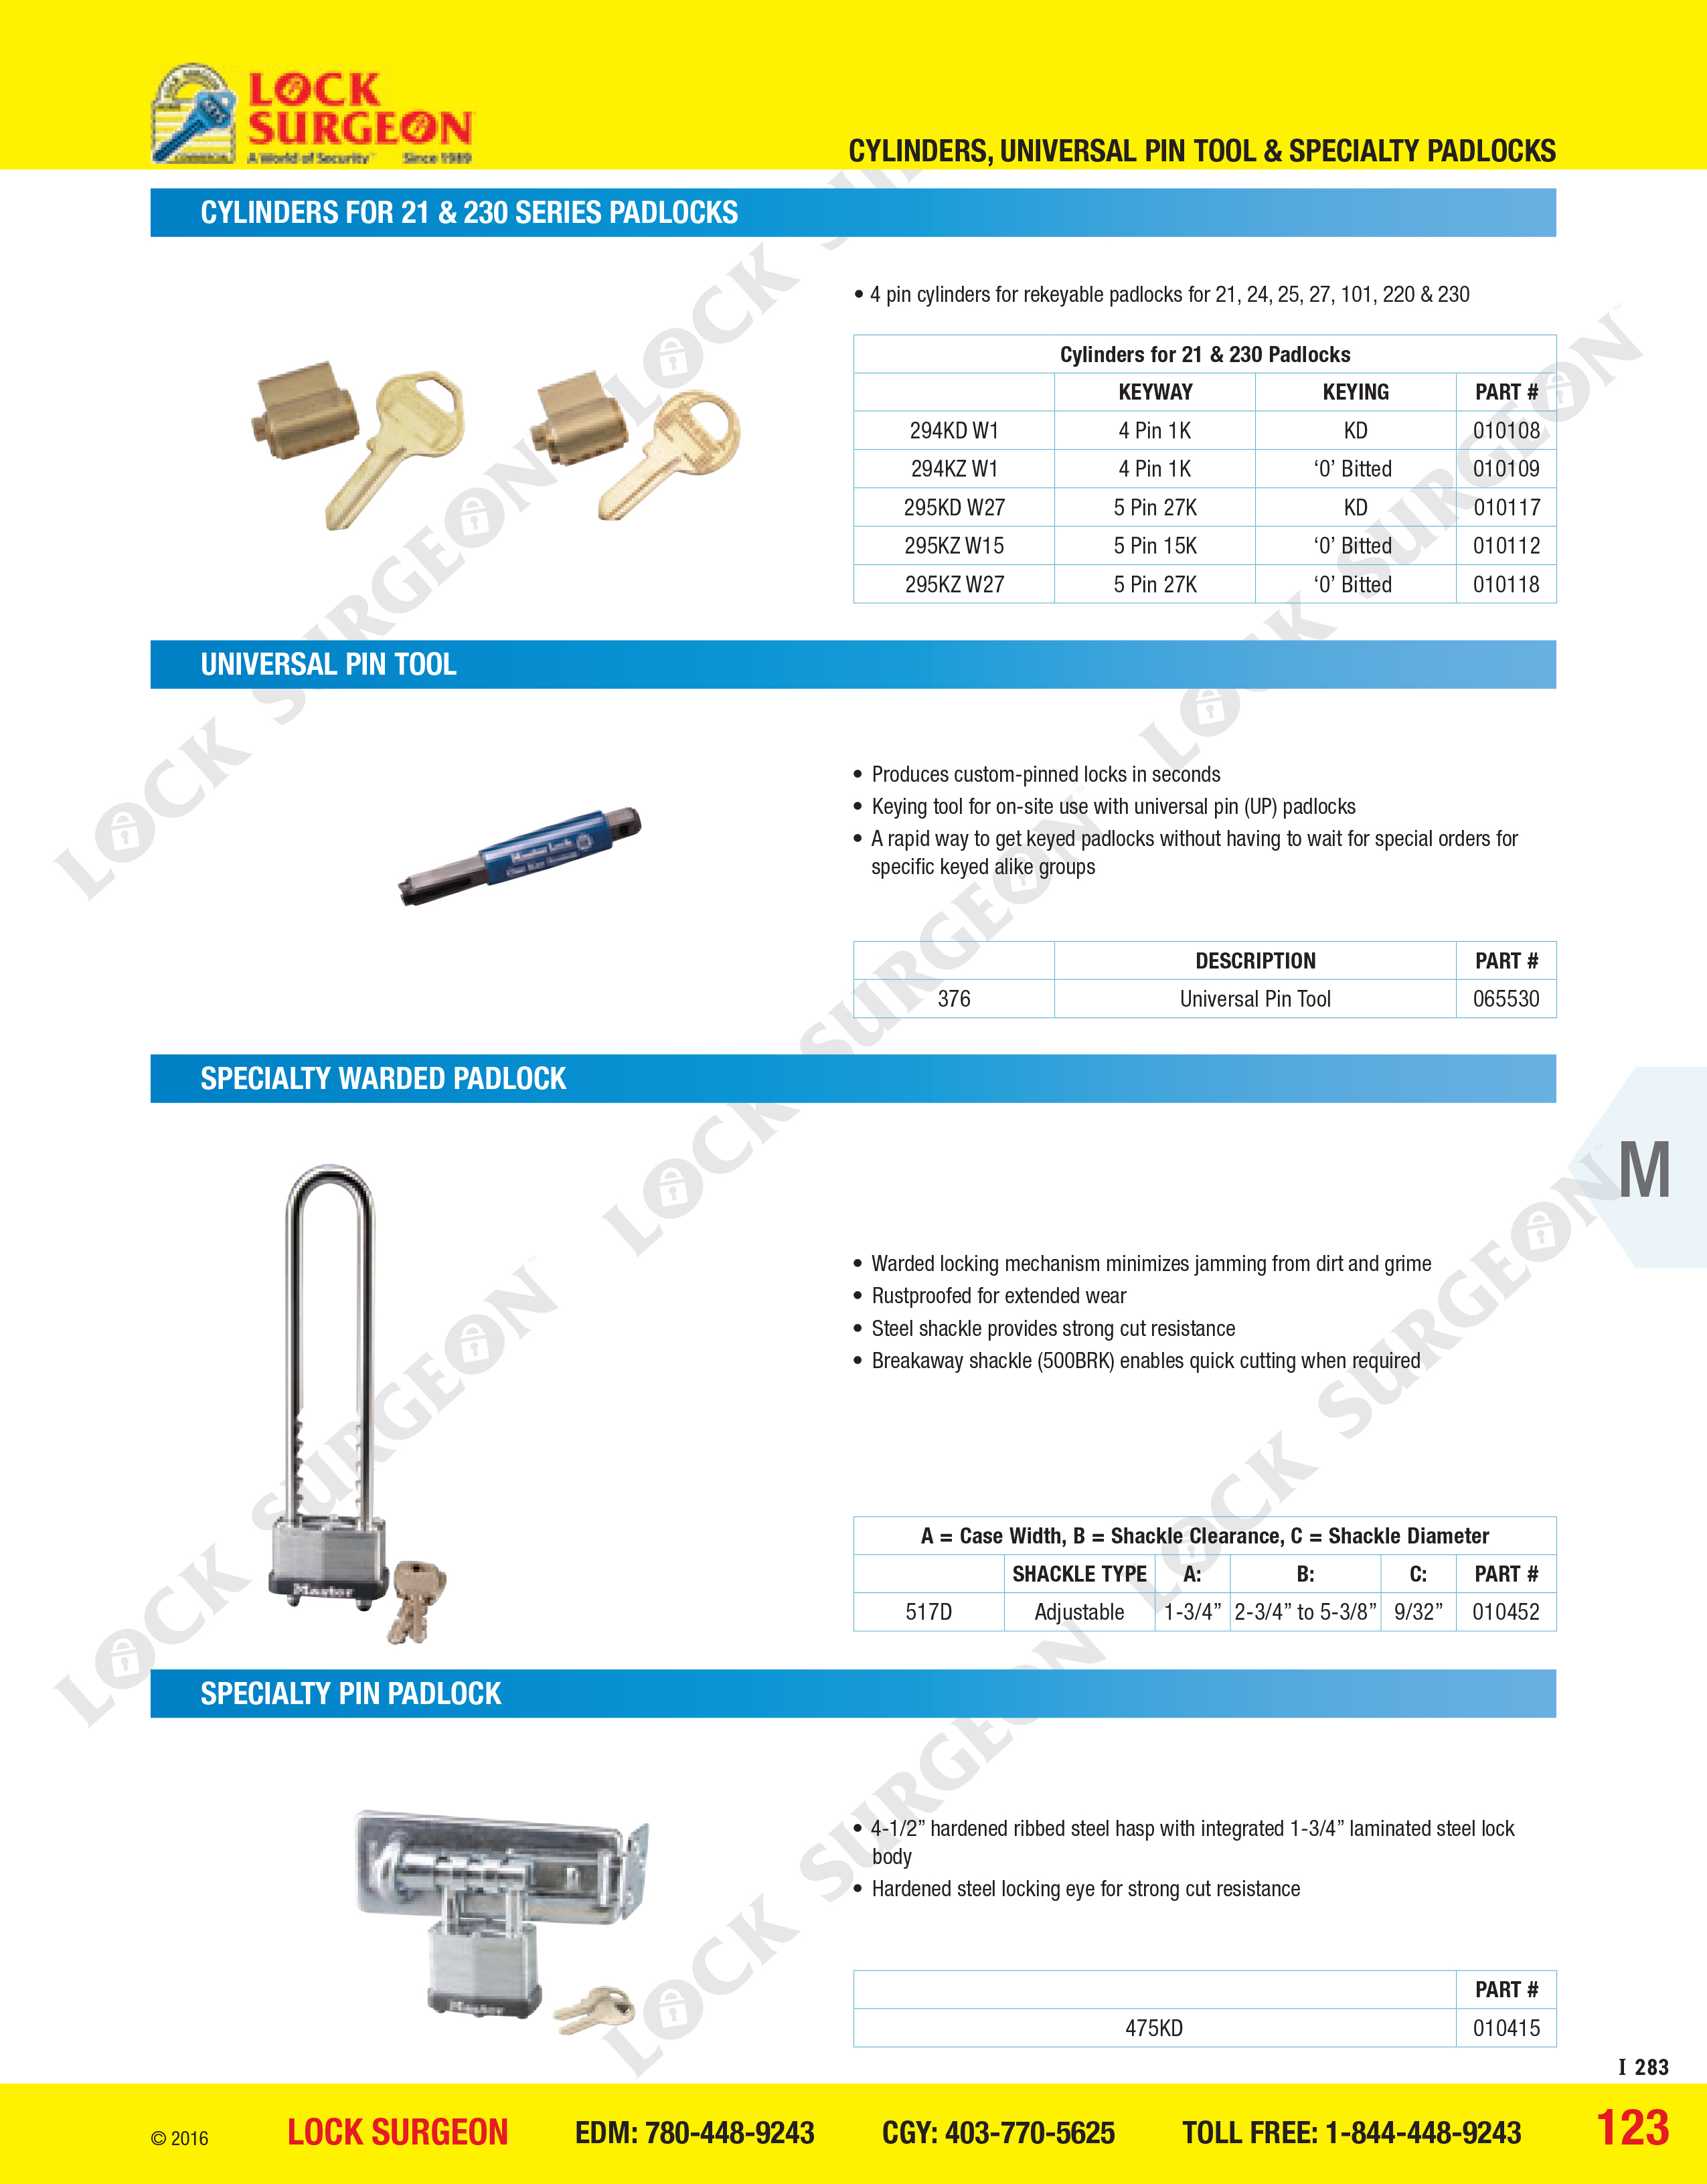 Master Lock Cylinders 21 & 230 series padlocks, universal pin tool, specialty padlock & pin padlock